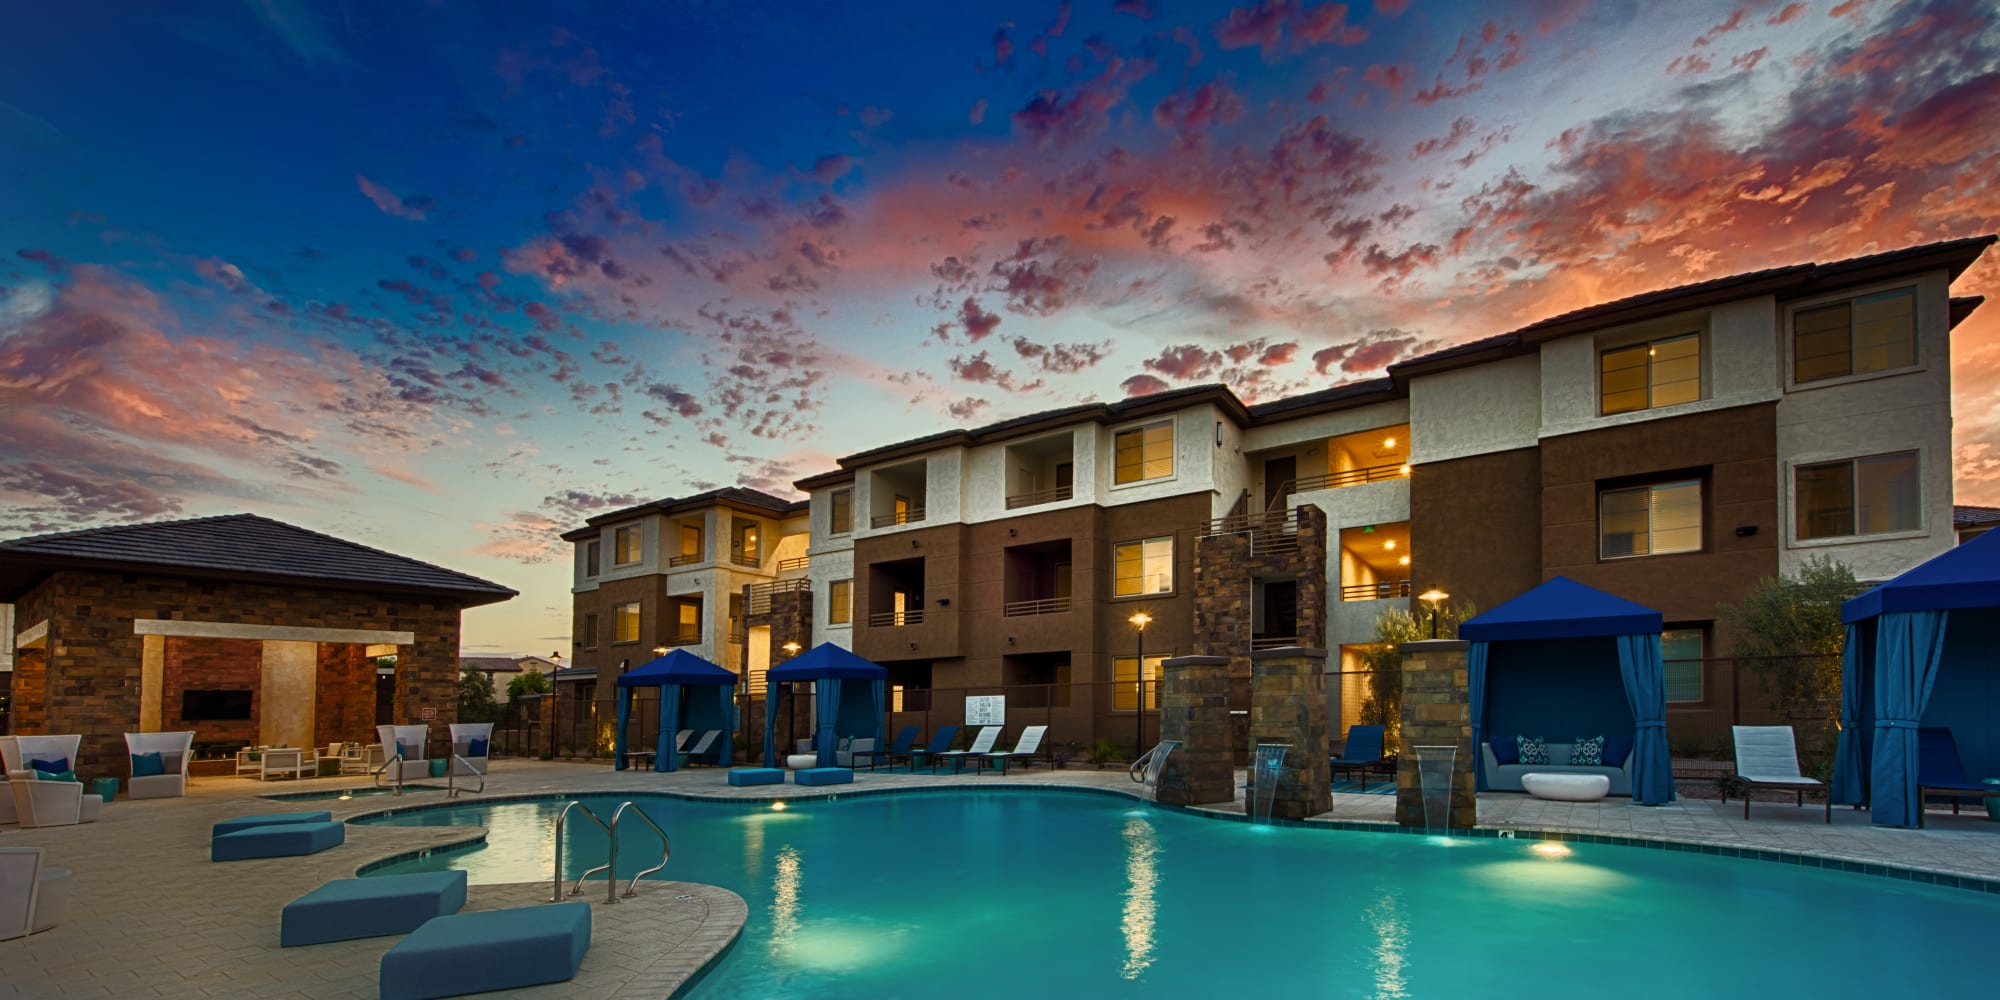 Apartments at Ocio Plaza Del Rio in Peoria, Arizona